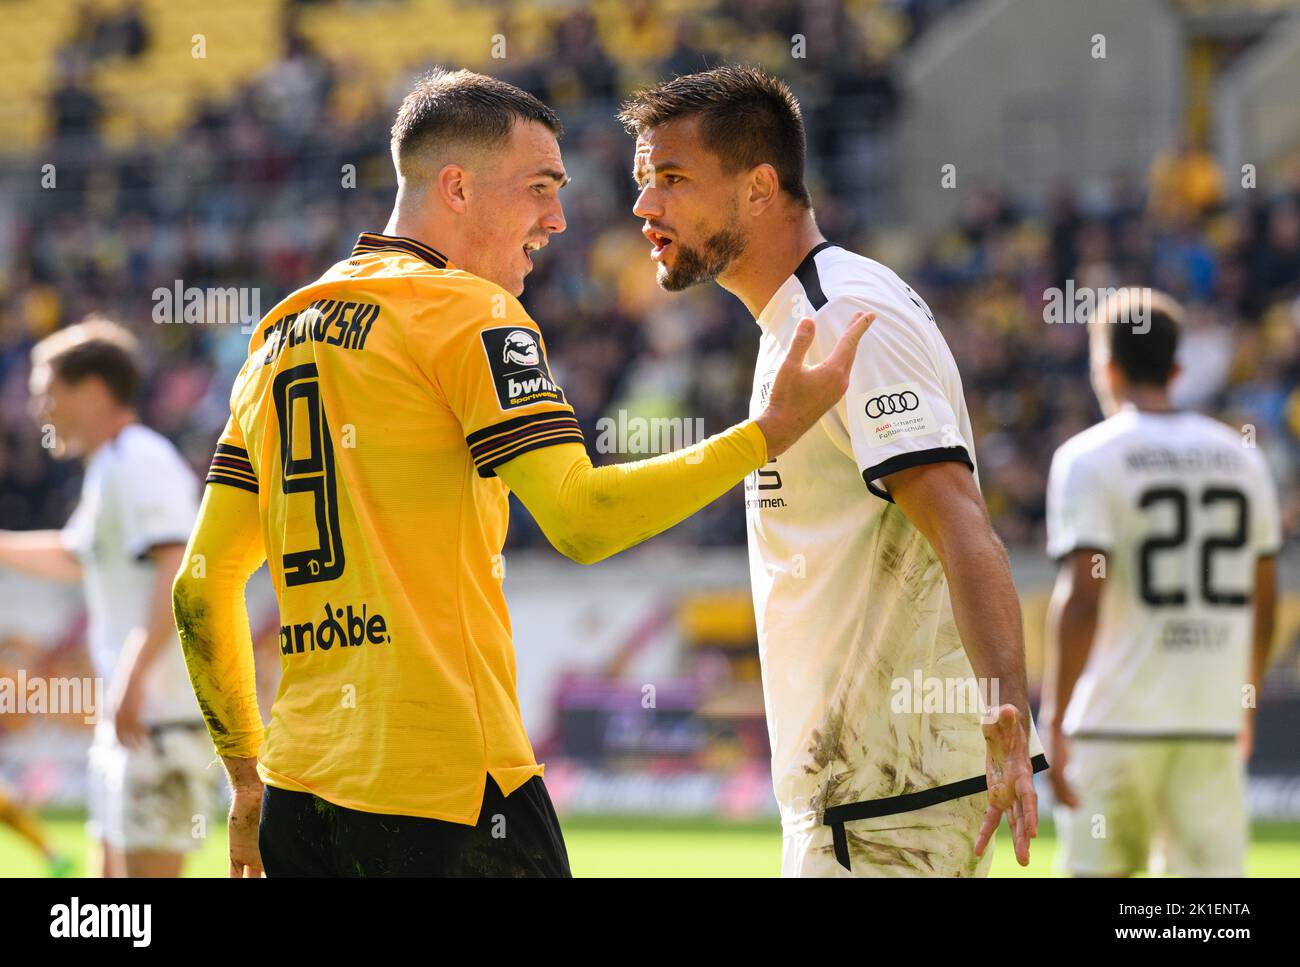 Dennis Borkowski of SG Dynamo Dresden celebrates after scoring during  News Photo - Getty Images